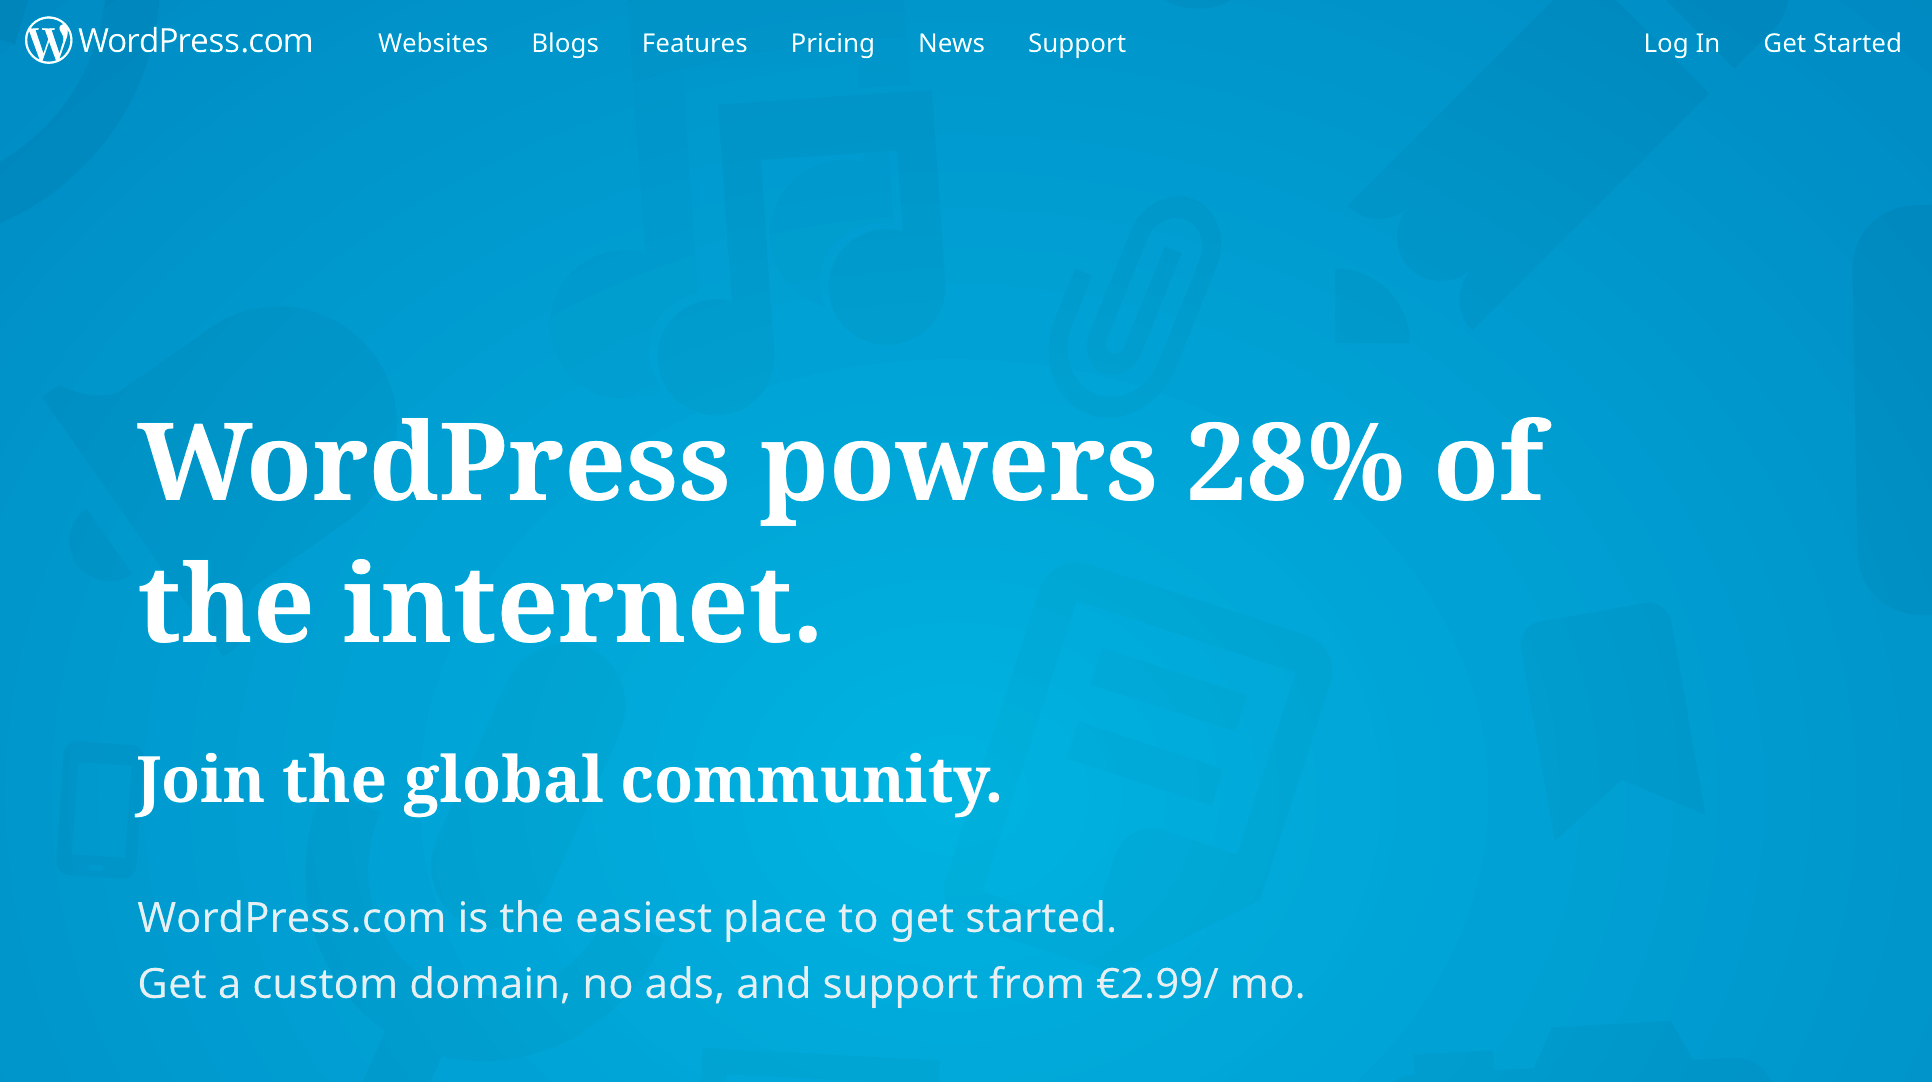 WordPress.com homepage